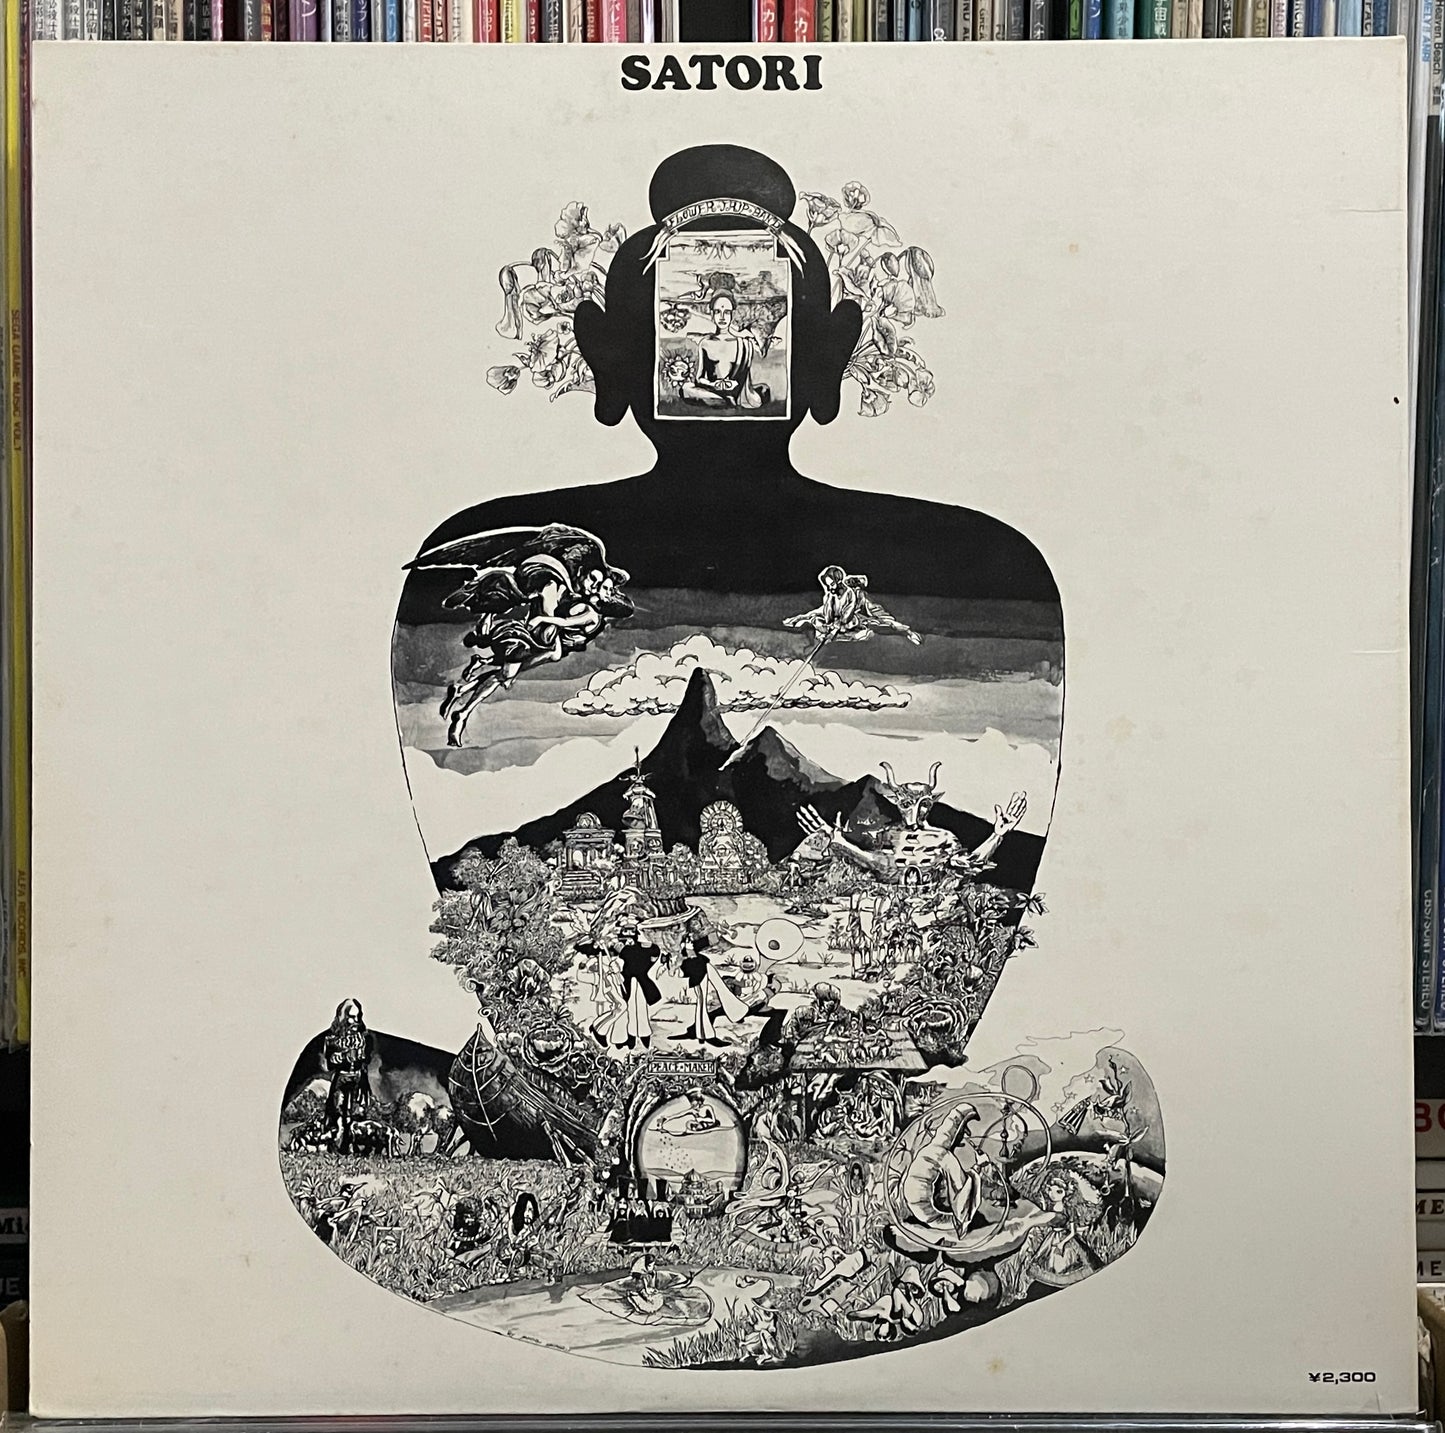 Flower Travellin’ Band “Satori” (1971)